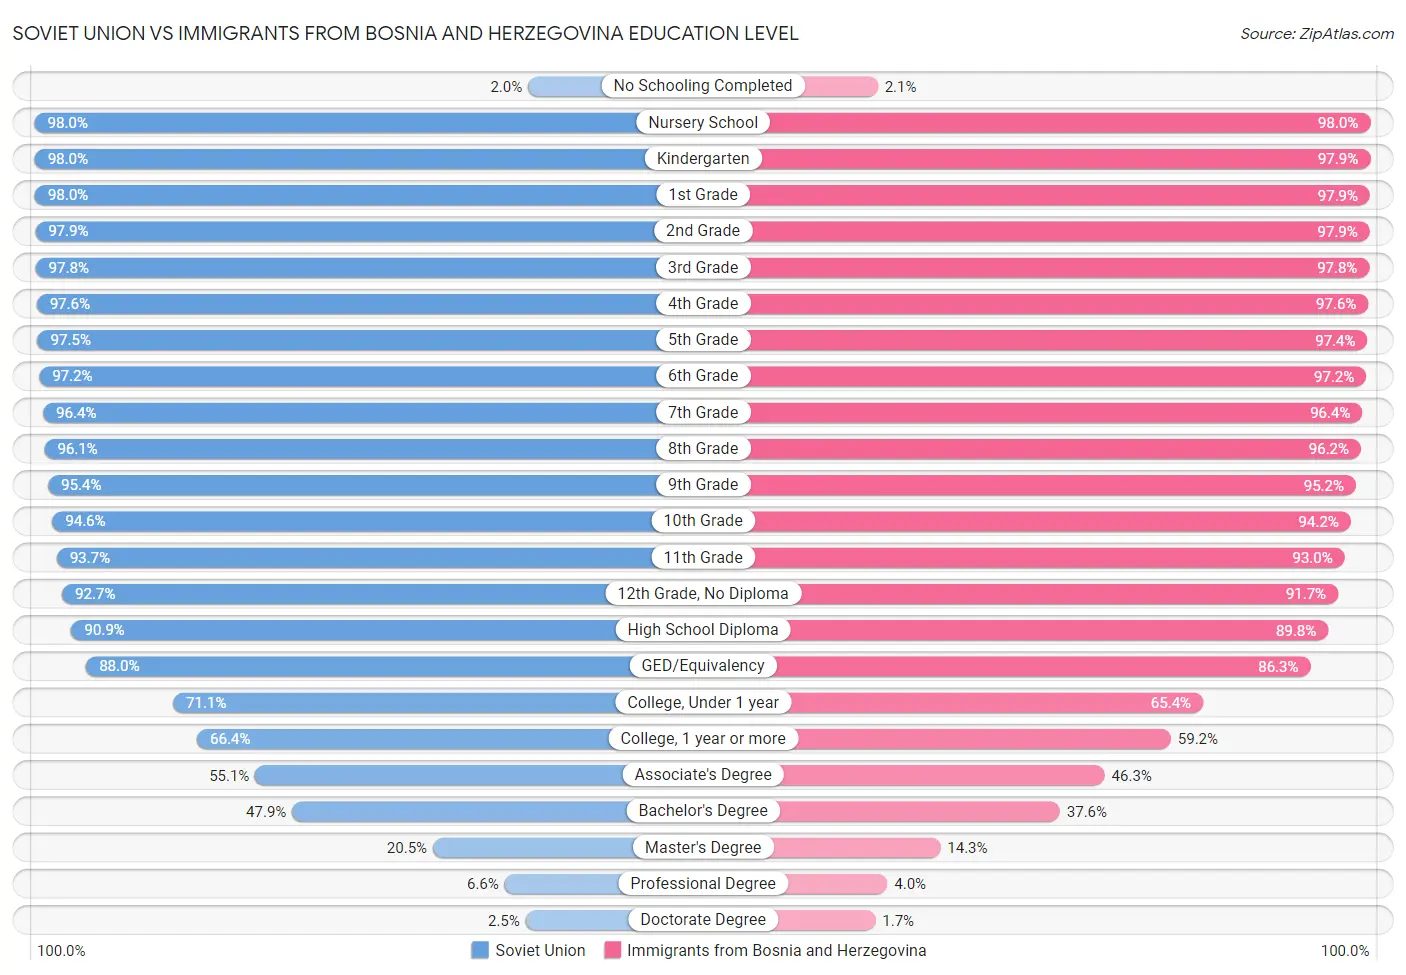 Soviet Union vs Immigrants from Bosnia and Herzegovina Education Level